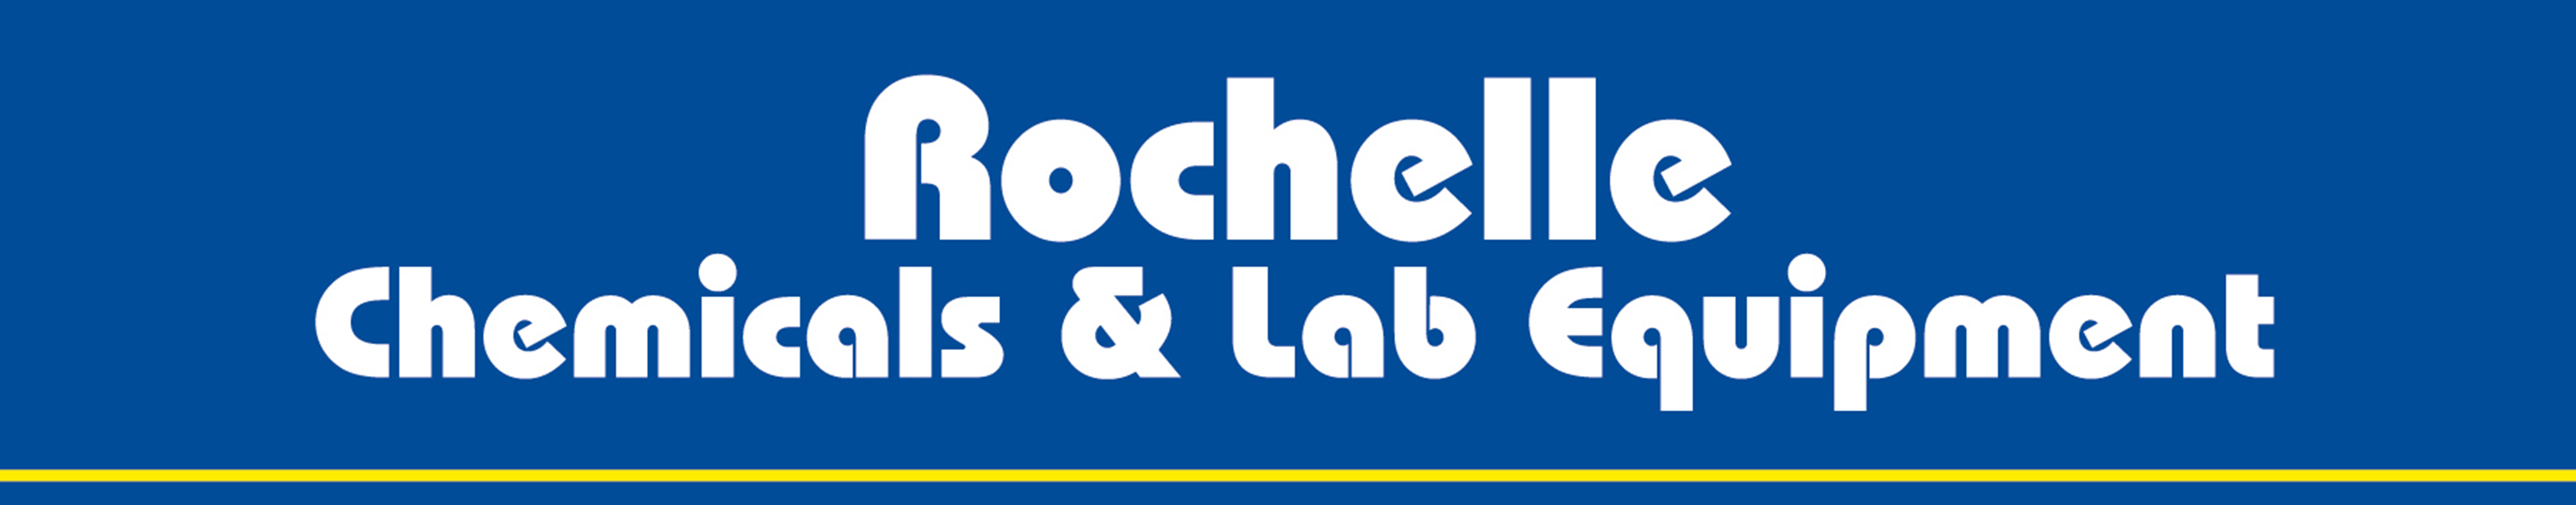 Rochelle Chemicals & Lab Equipment cc logo